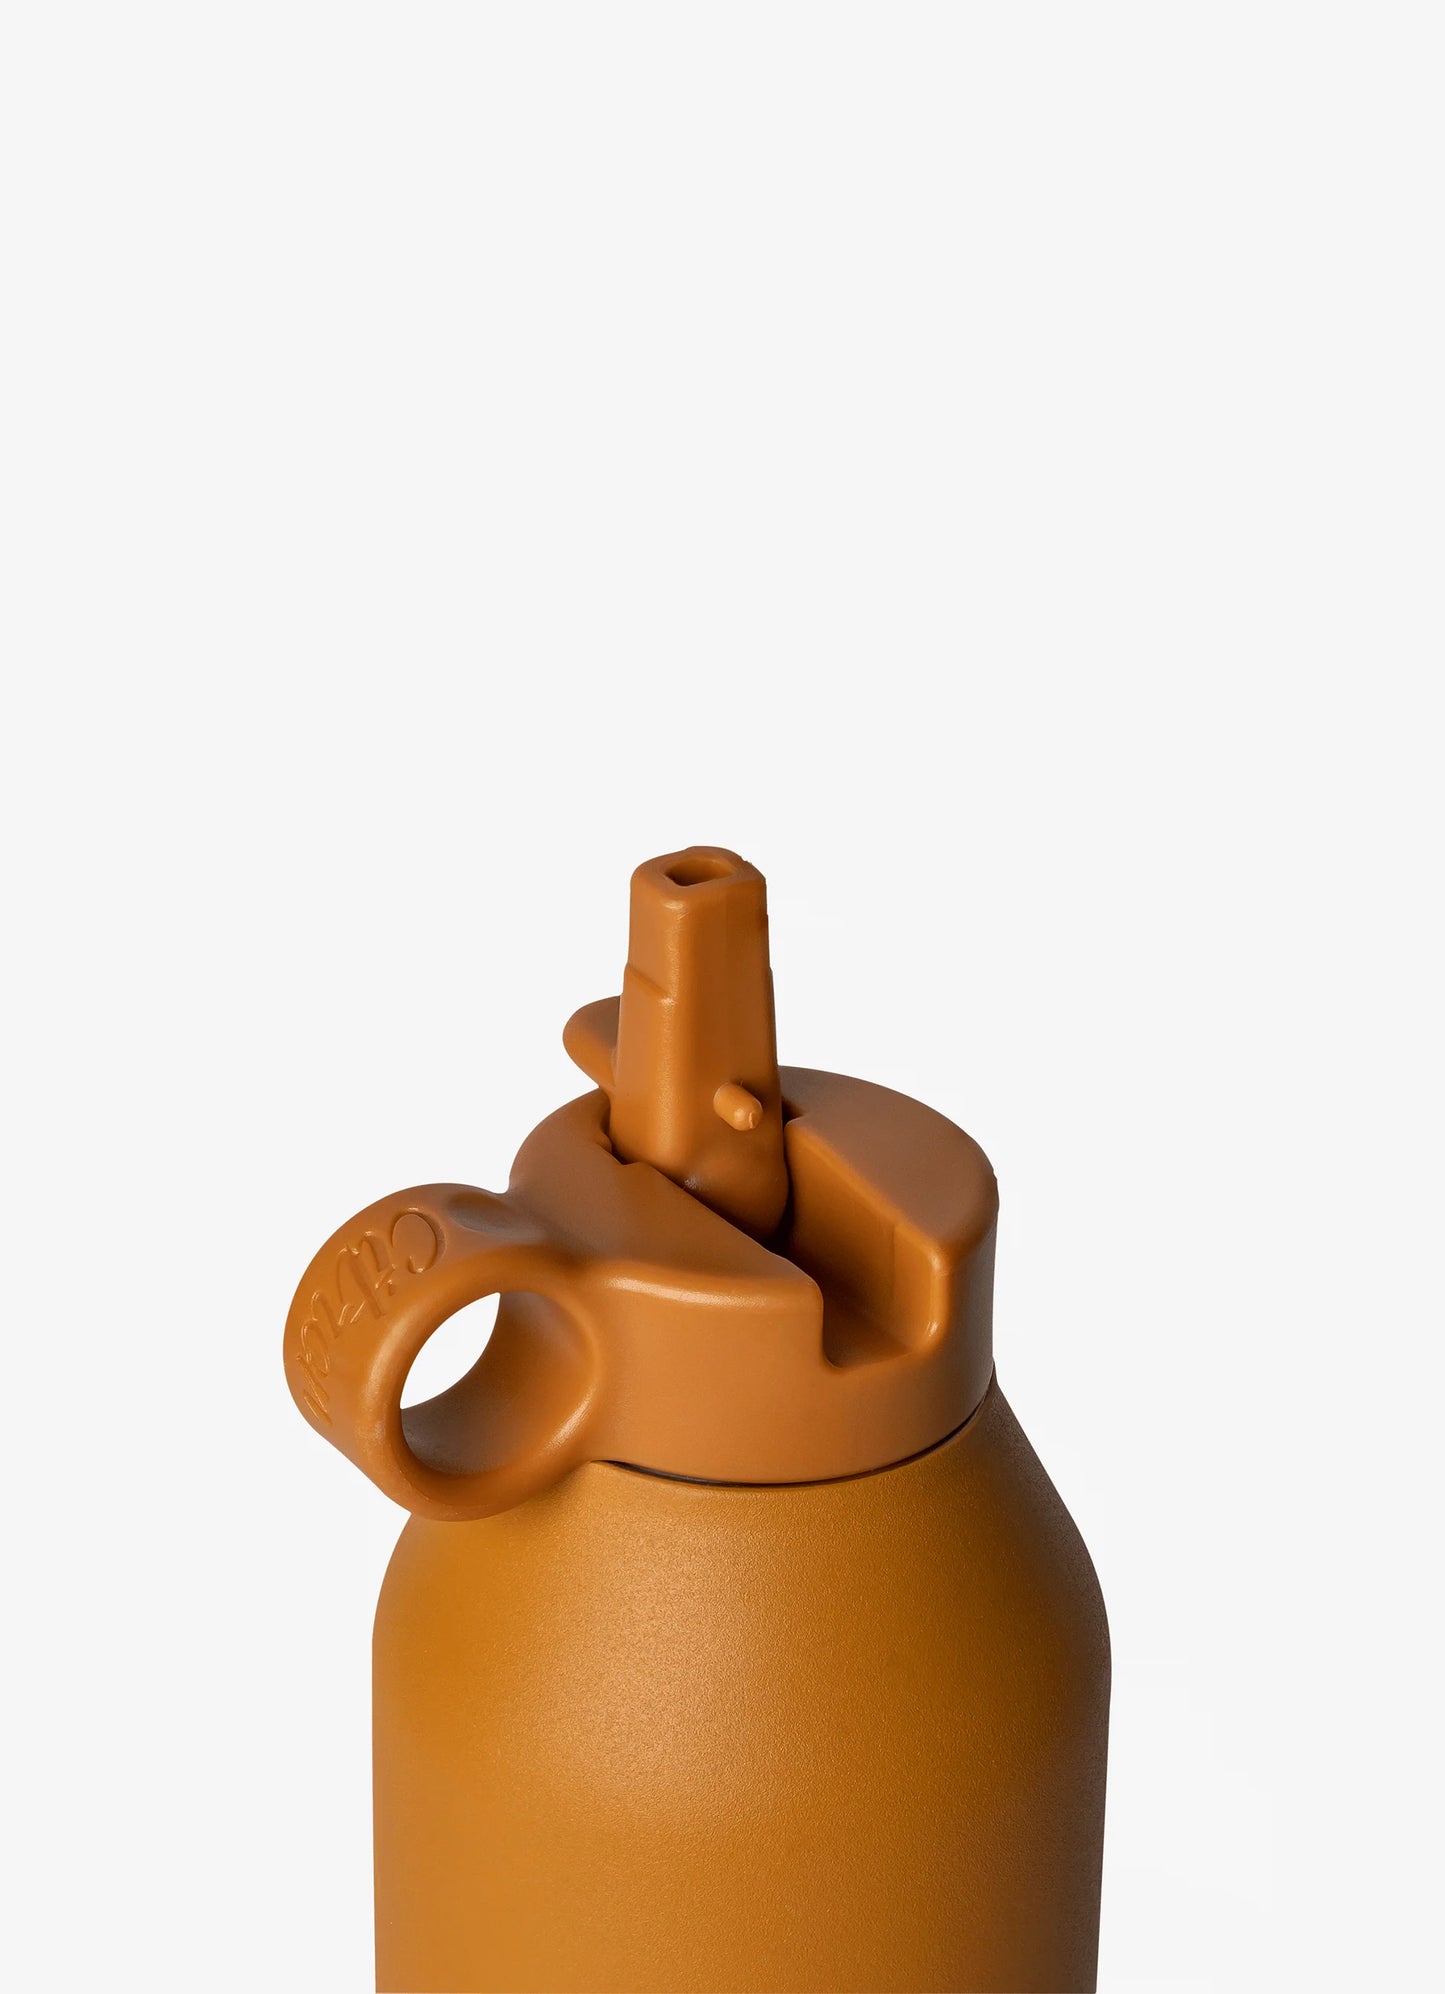 750ml Insulated Water Bottle Caramel